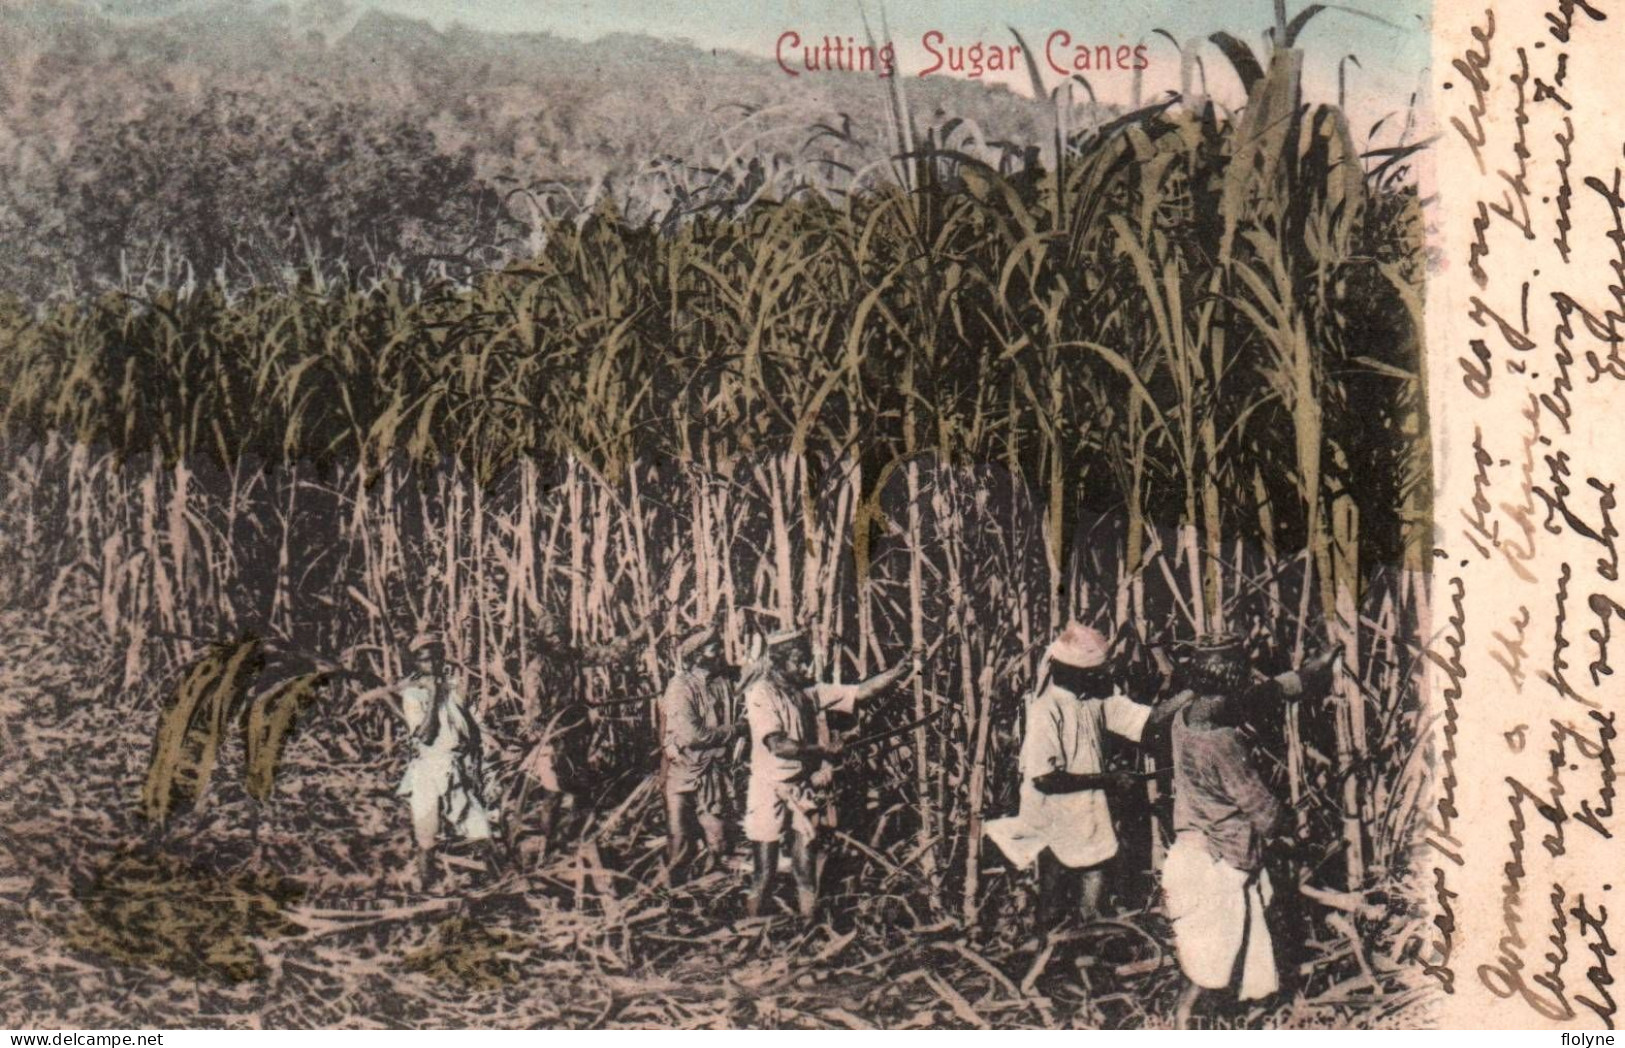 Durban ? - Cutting Sugar Canes - Cannes à Sucre - Afrique Du Sud South Africa Transvaal - Sud Africa